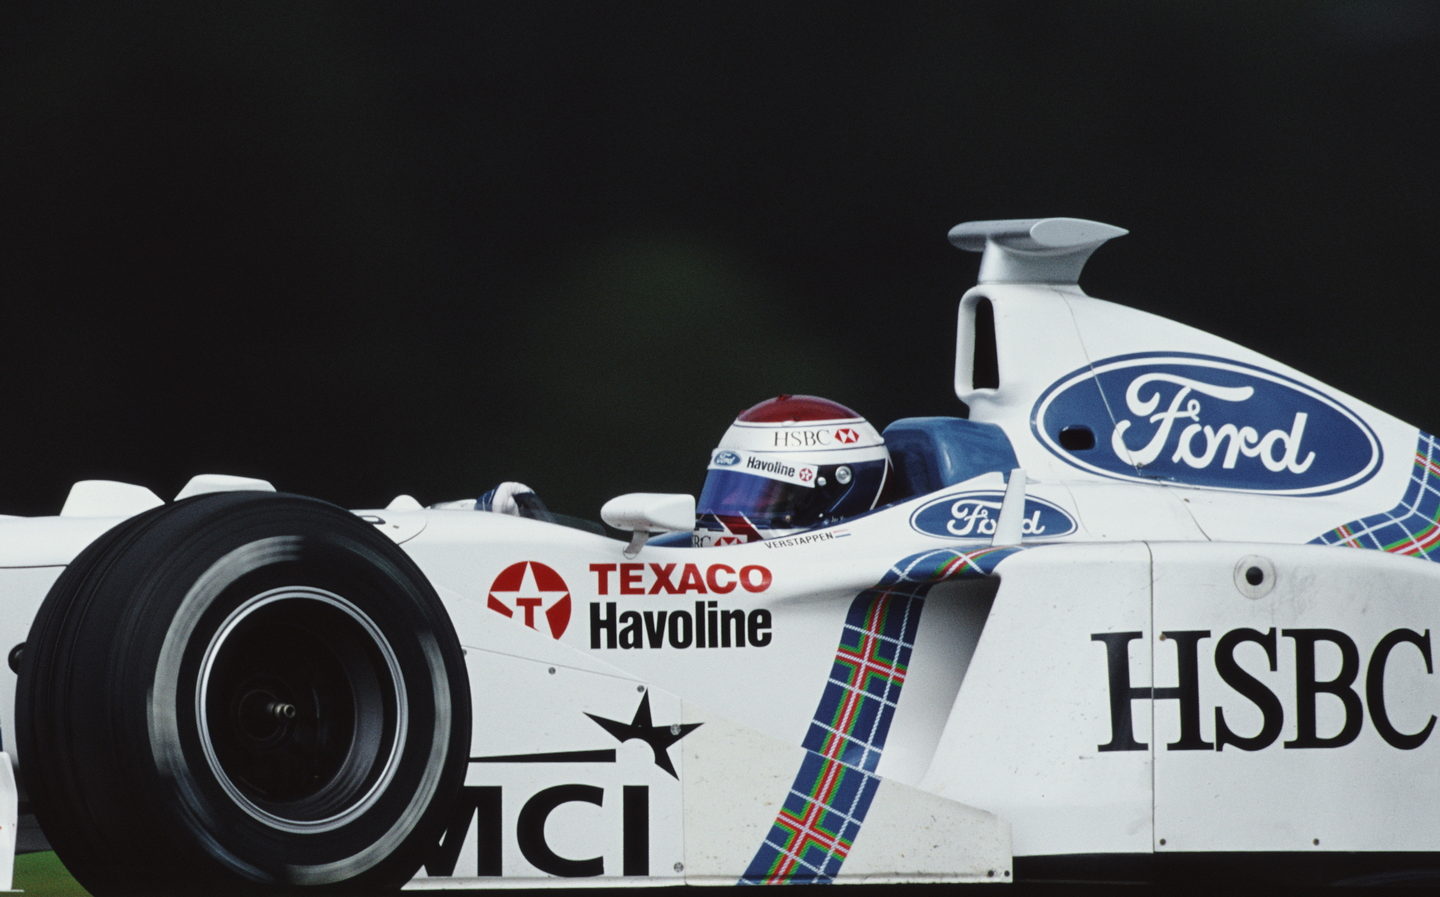 Ford in F1 - Rubens Barrichello at the wheel of a Stewart car